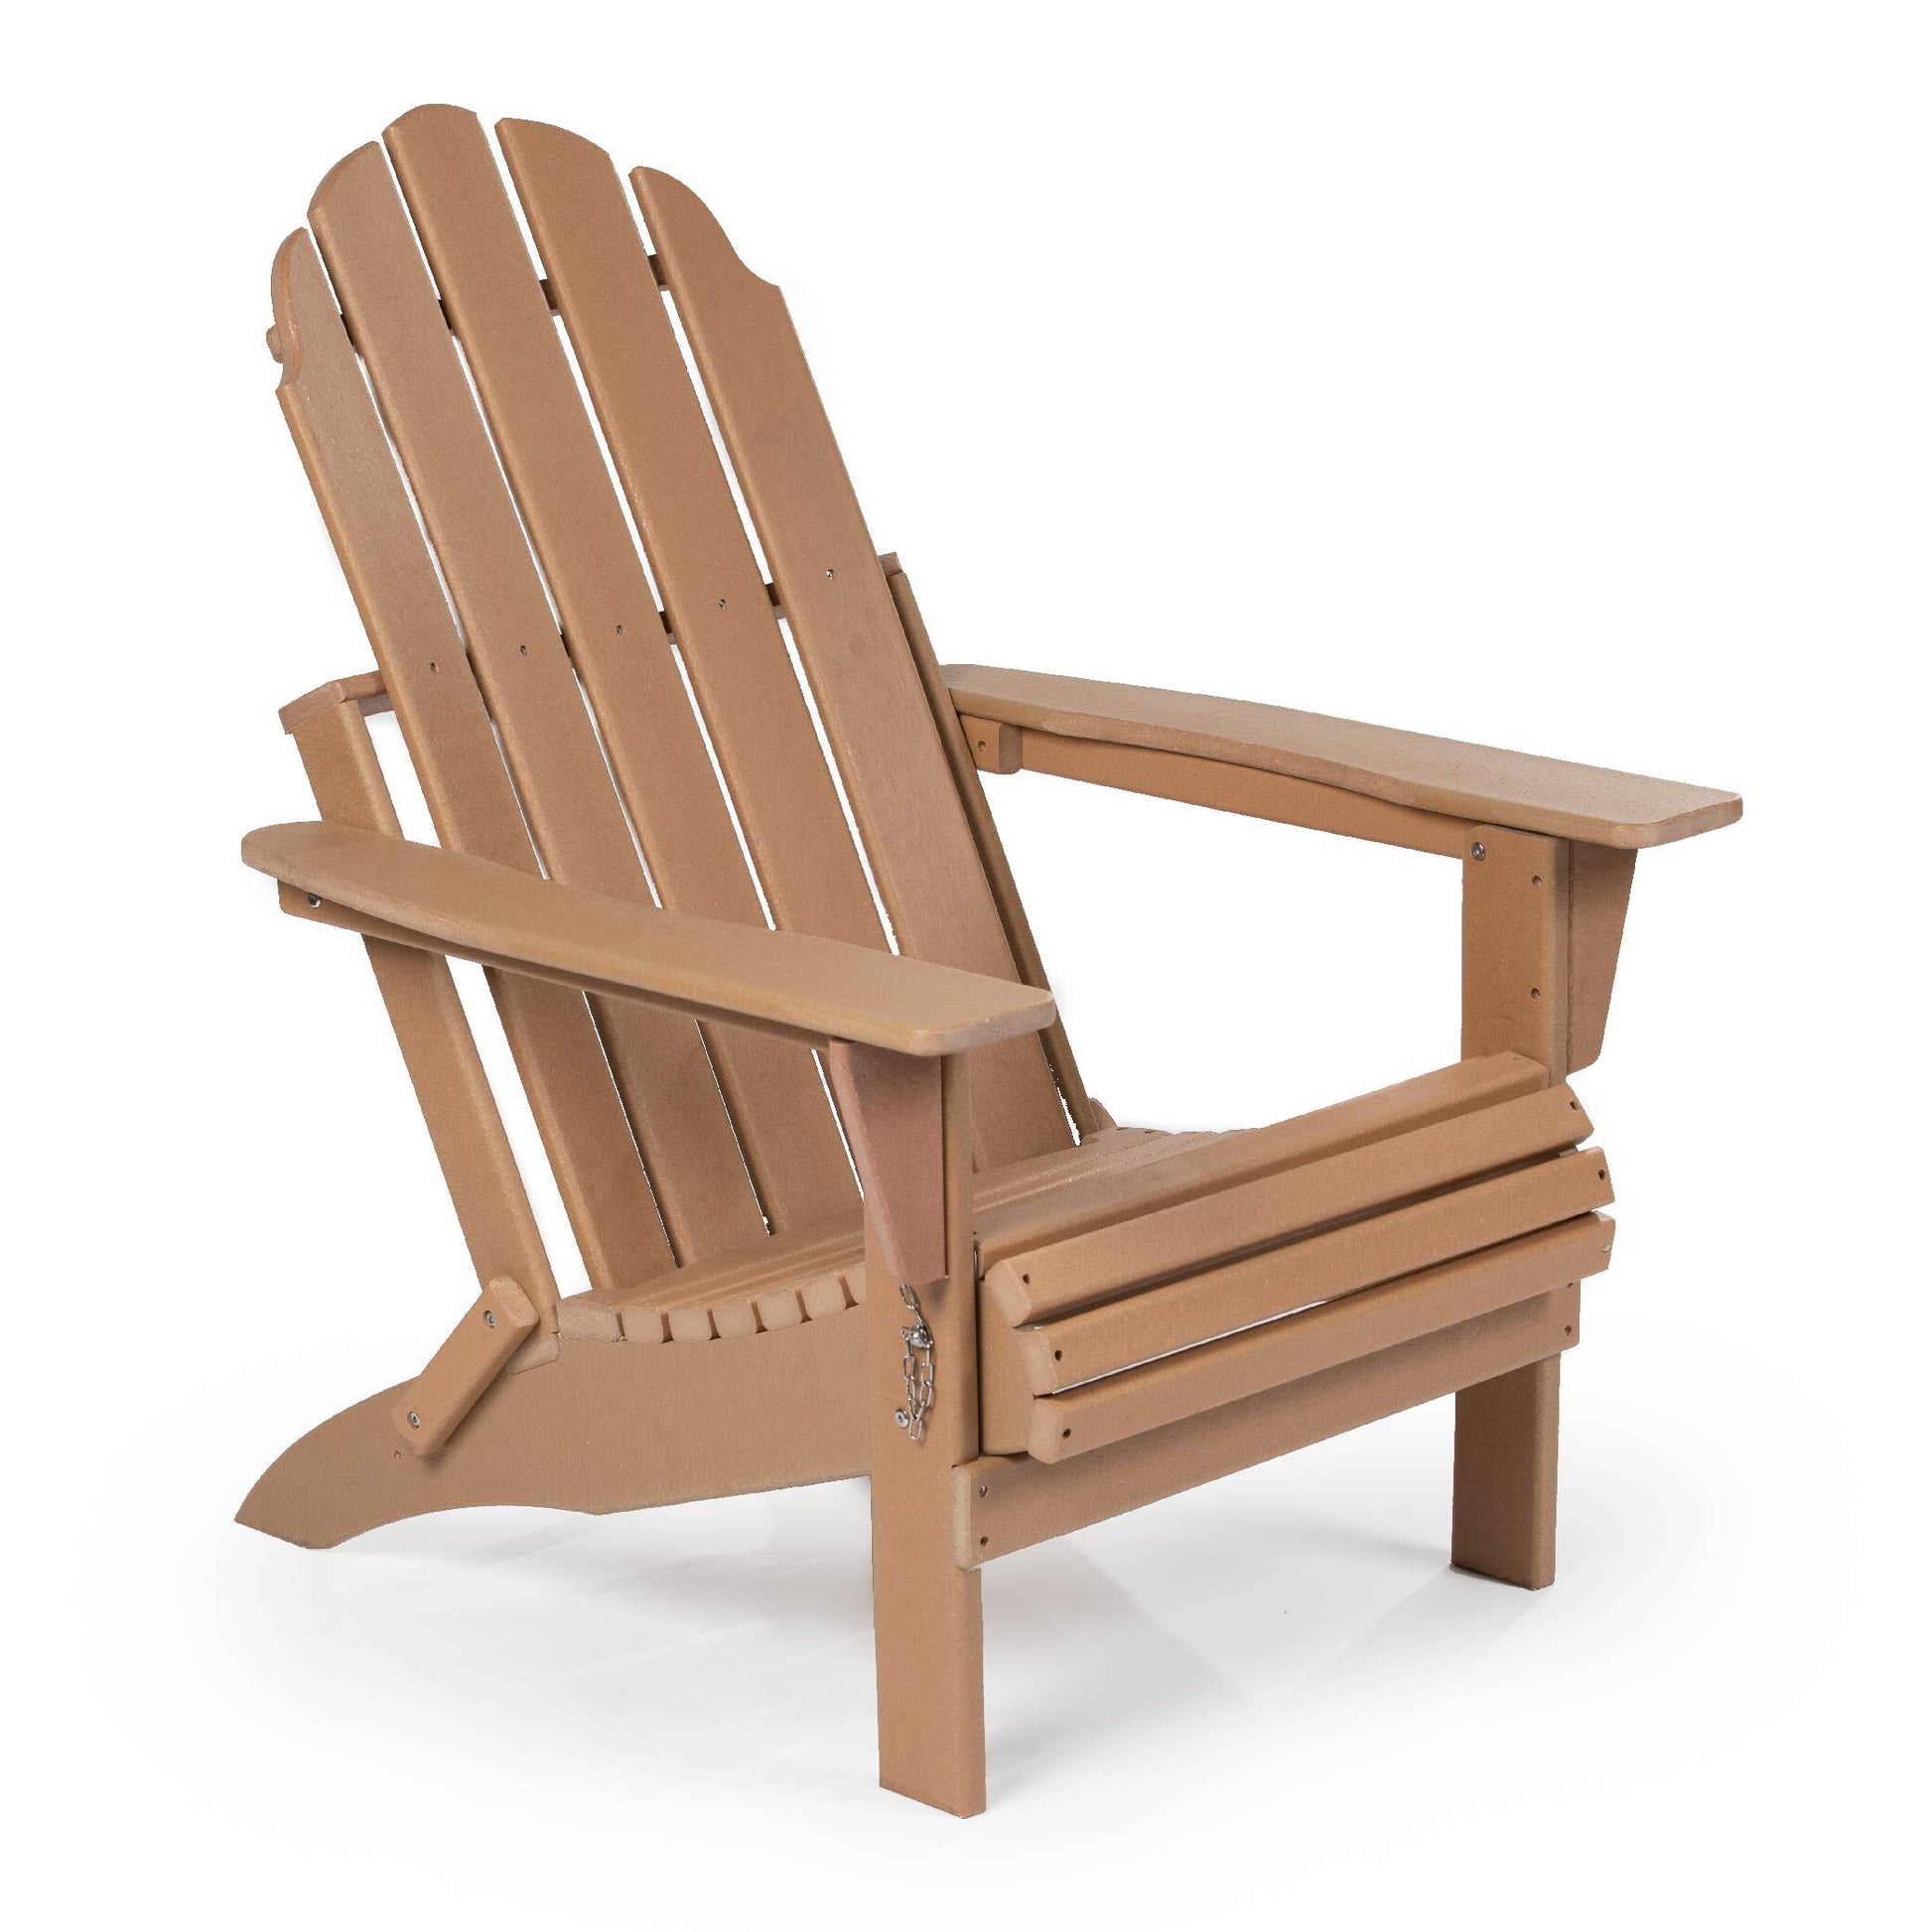 SCRATCH AND DENT - Everwood Hilltop Adirondack Folding Chair - Latte Weatherwood - FINAL SALE